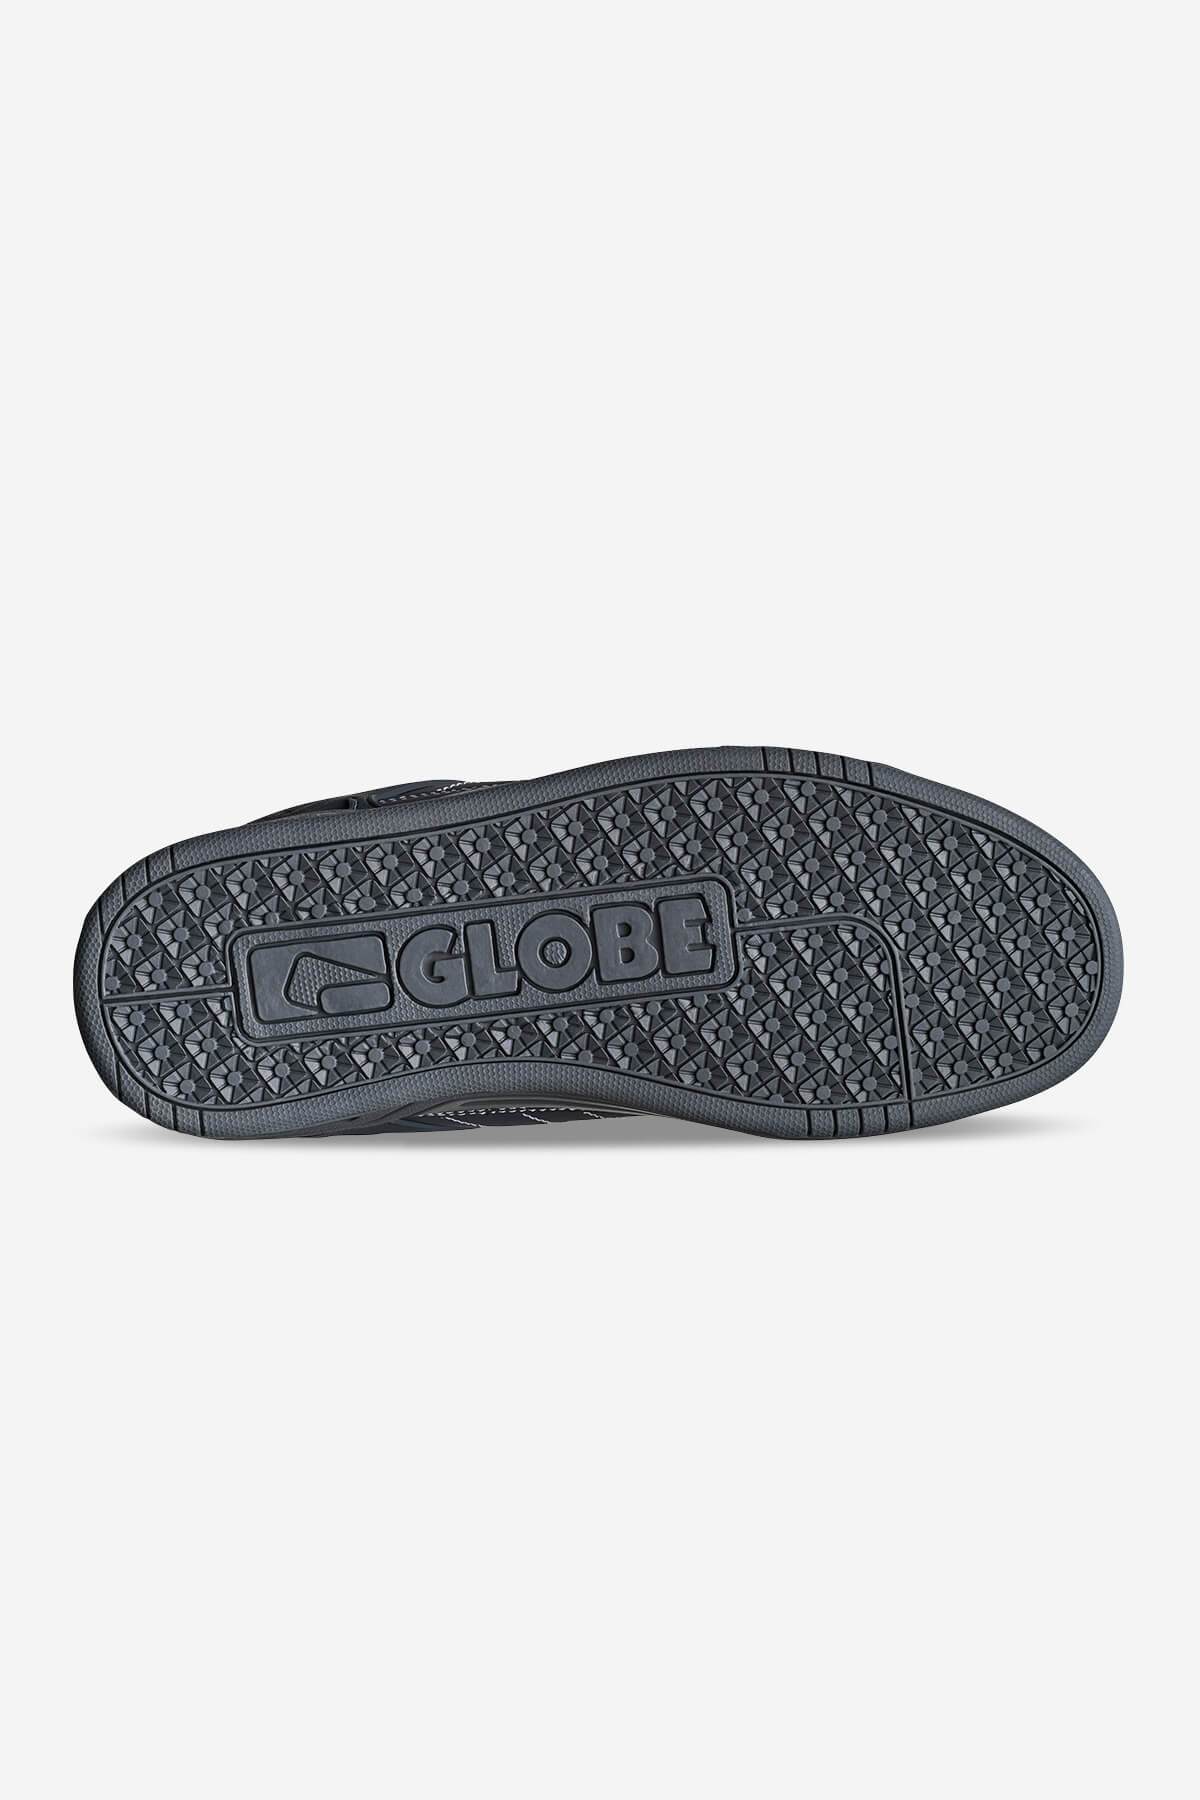 Globe - Tilt - Ebenholz/Stitch - skateboard Schuhe